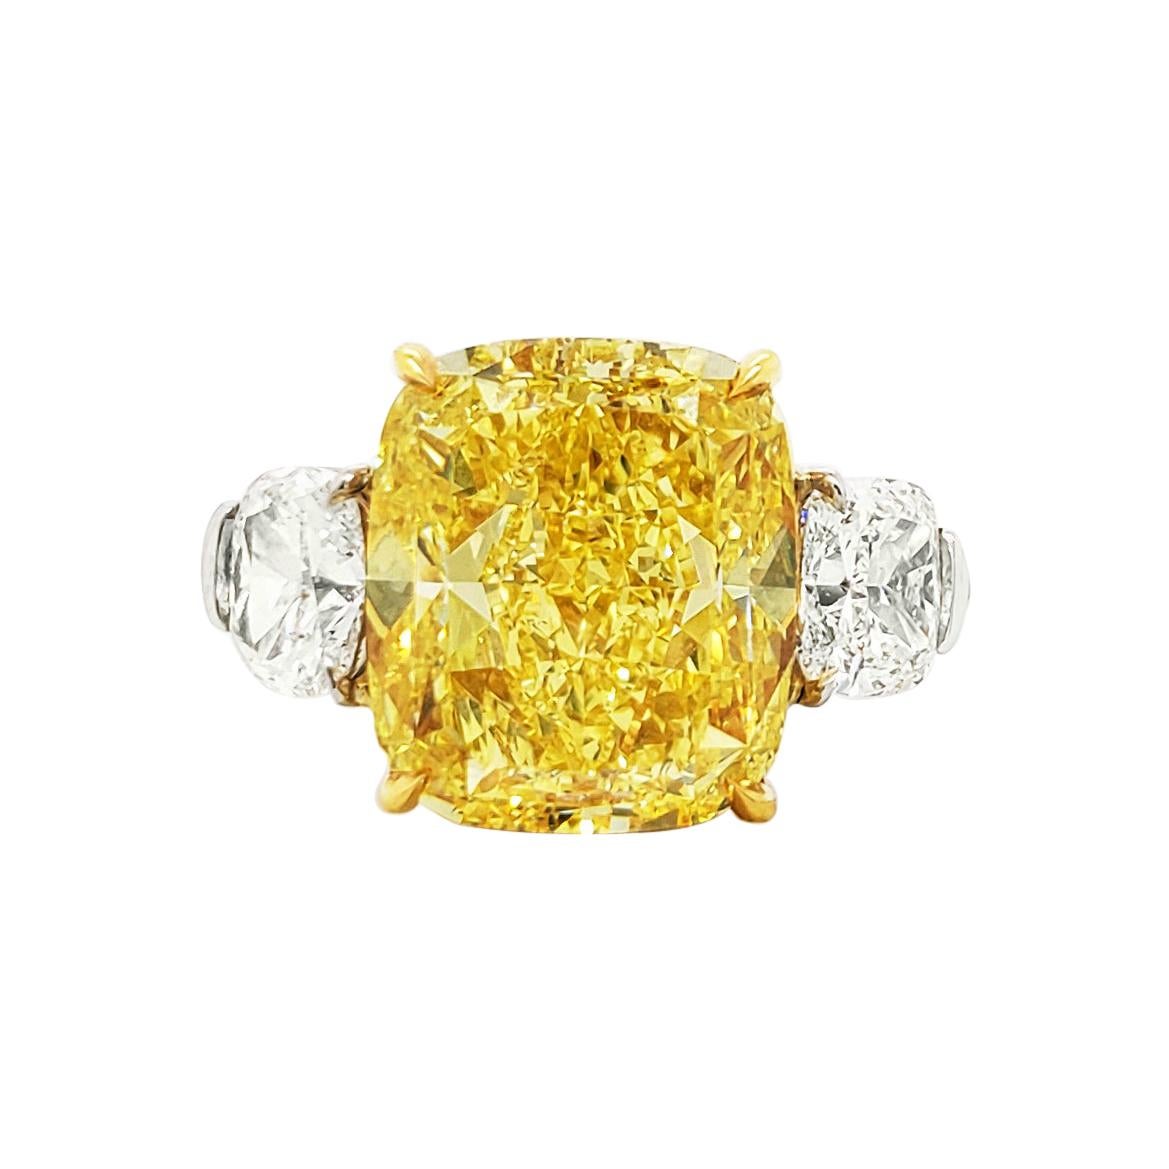 SCARSELLI 9 Carat Fancy Vivid Yellow Natural Diamond Engagement Ring GIA